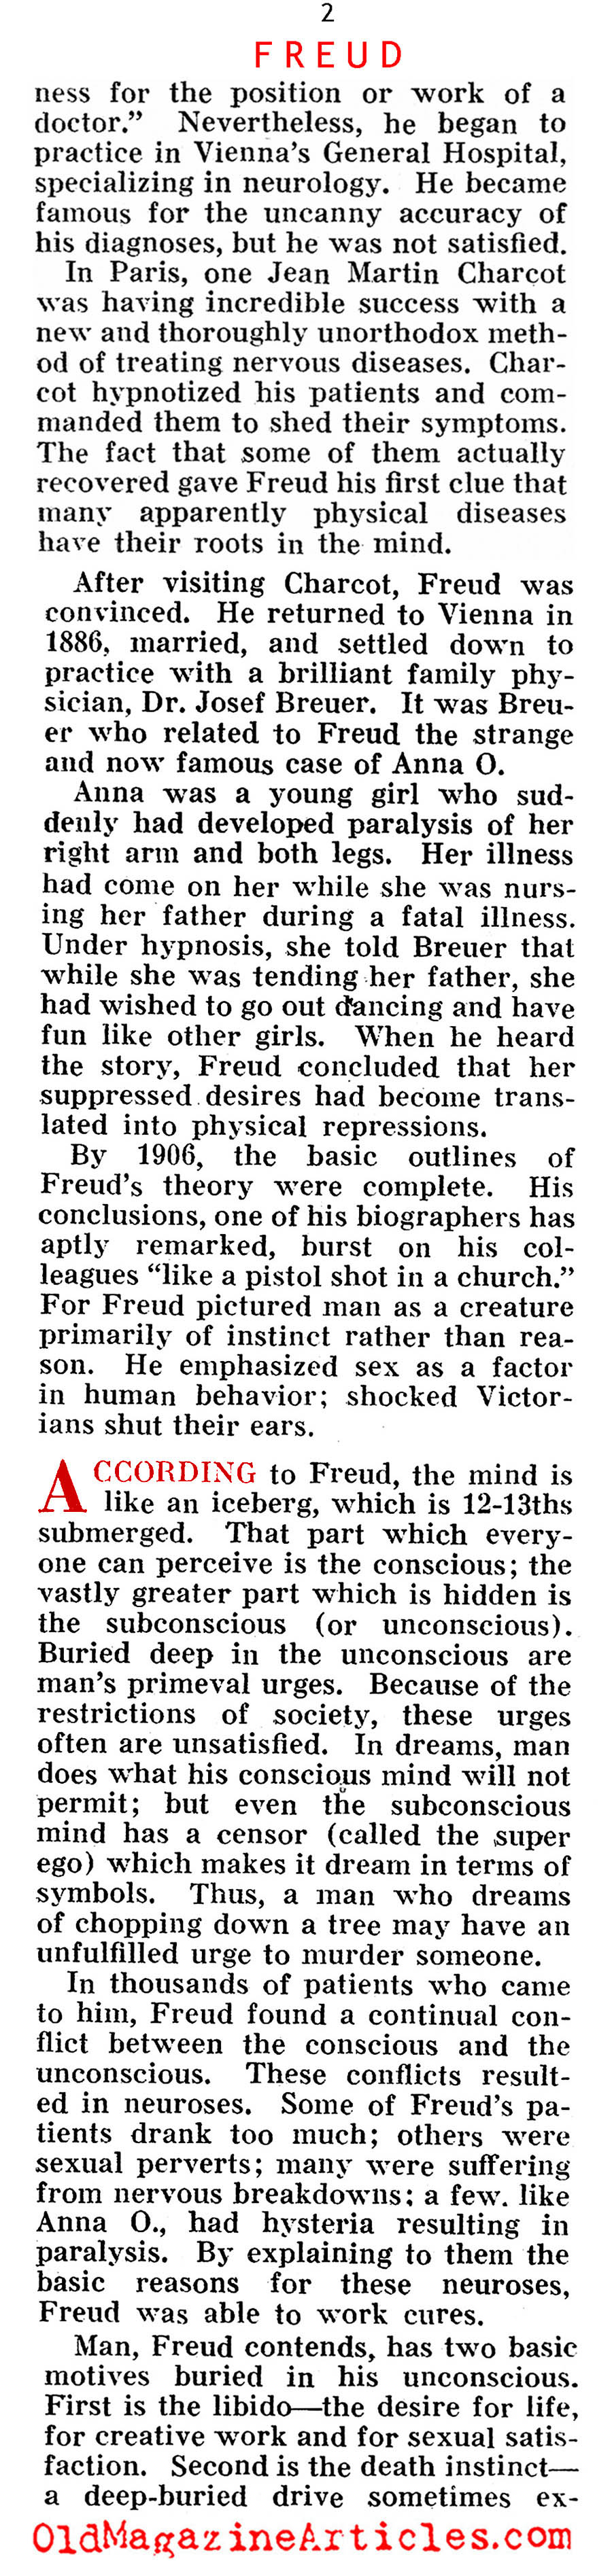 Dr. Freud (Pathfinder Magazine, 1939)